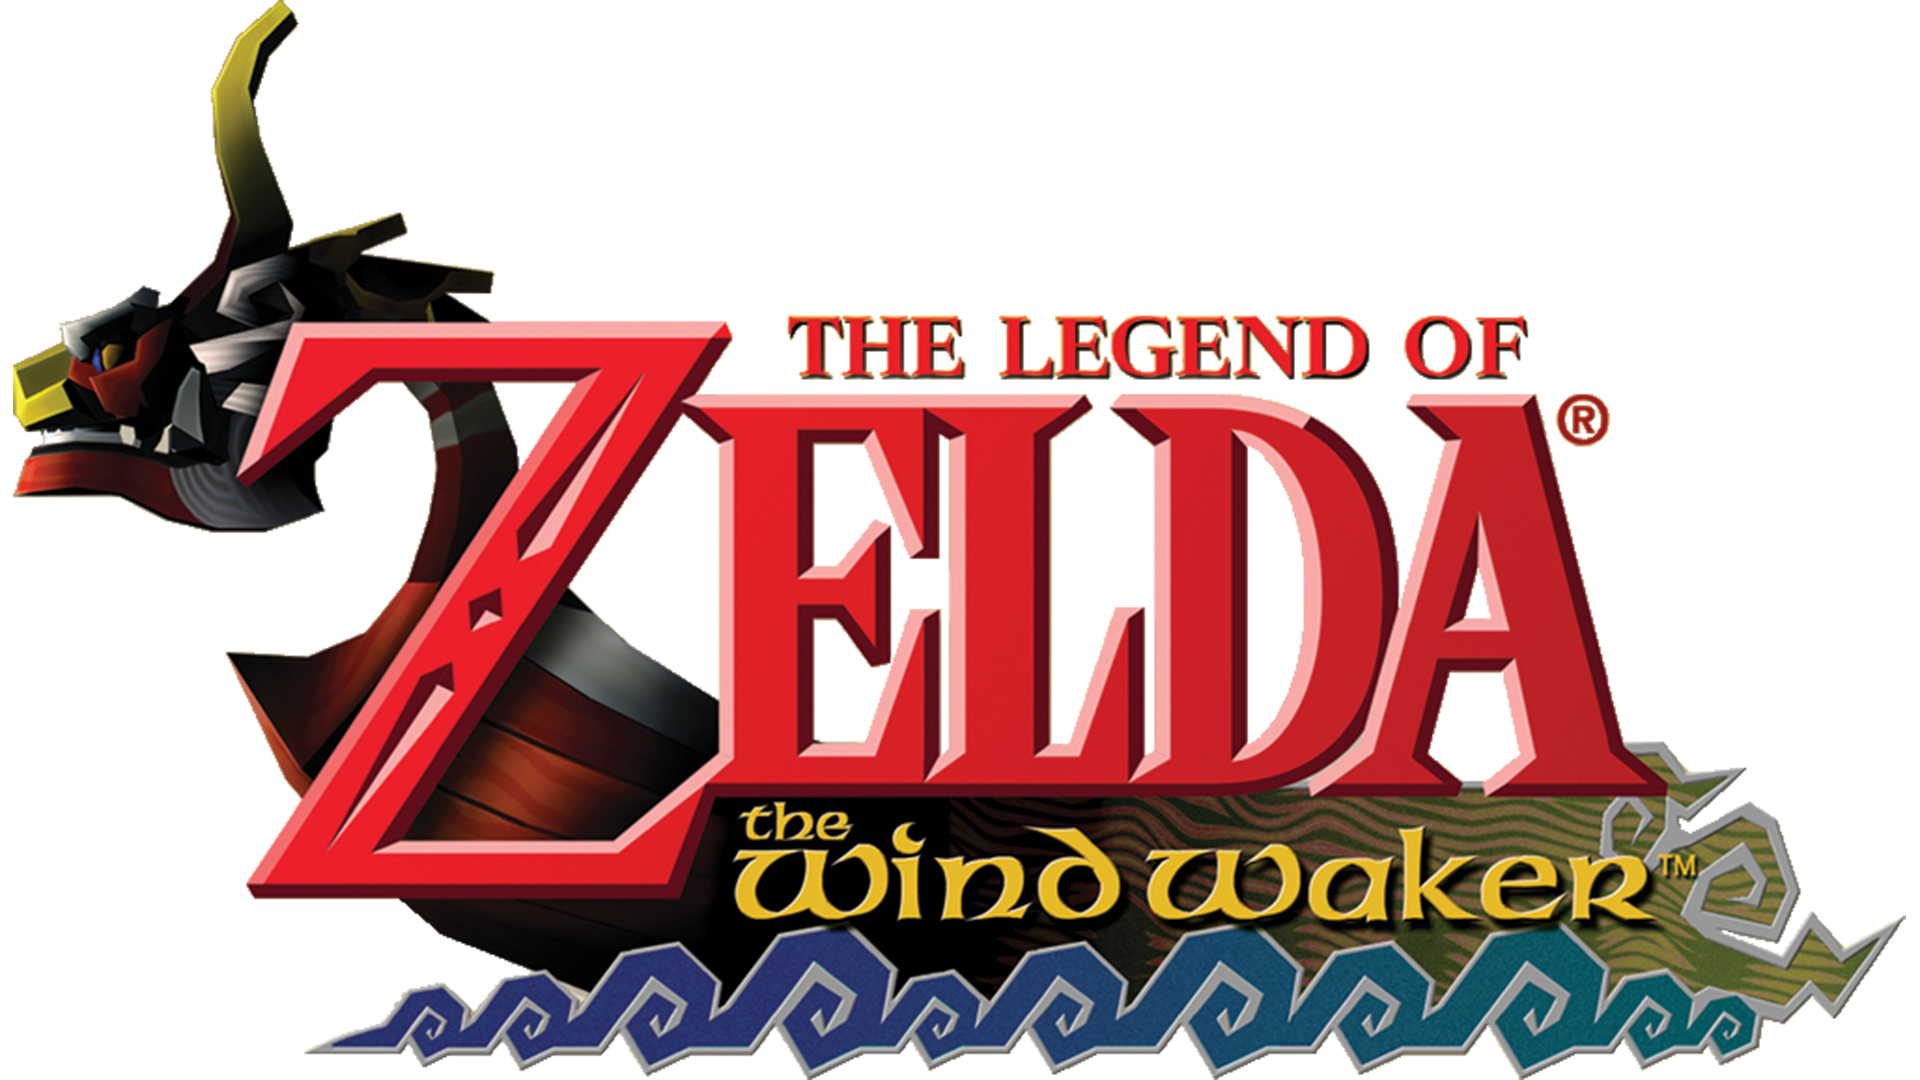 The Legend of Zelda: The Wind Waker Logo